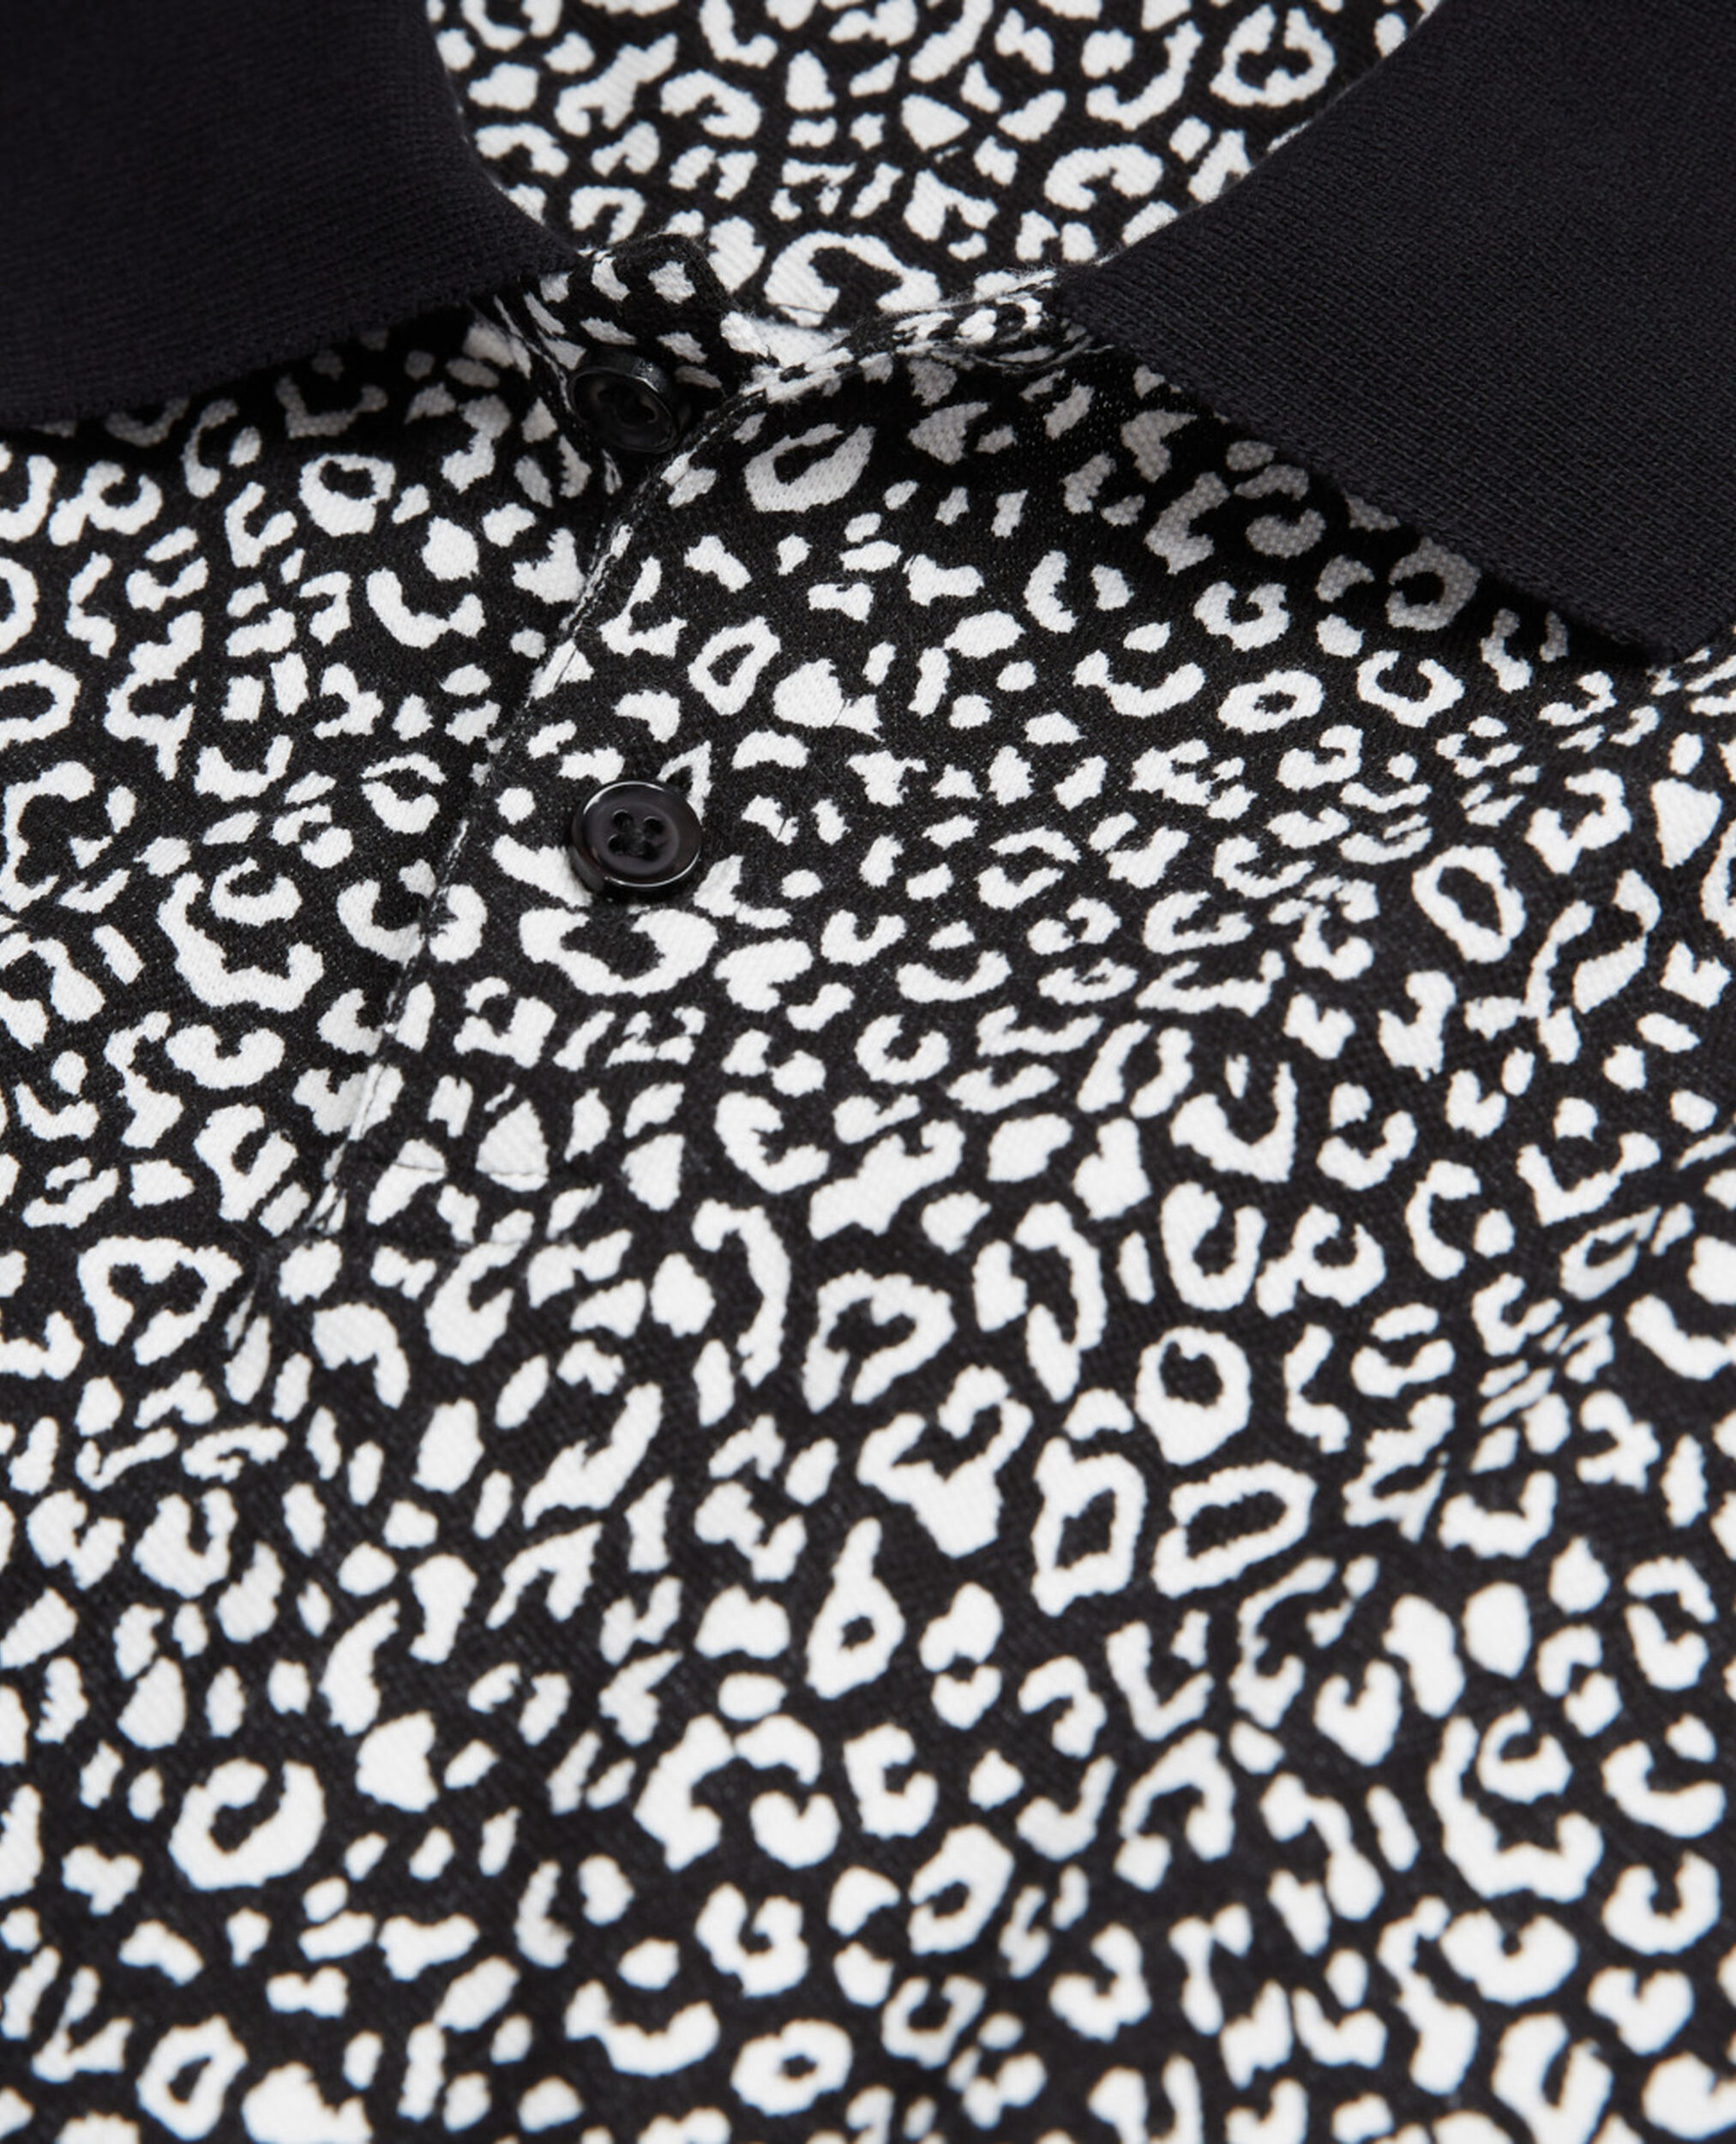 Camisa polo leopardo negra, ECRU, hi-res image number null